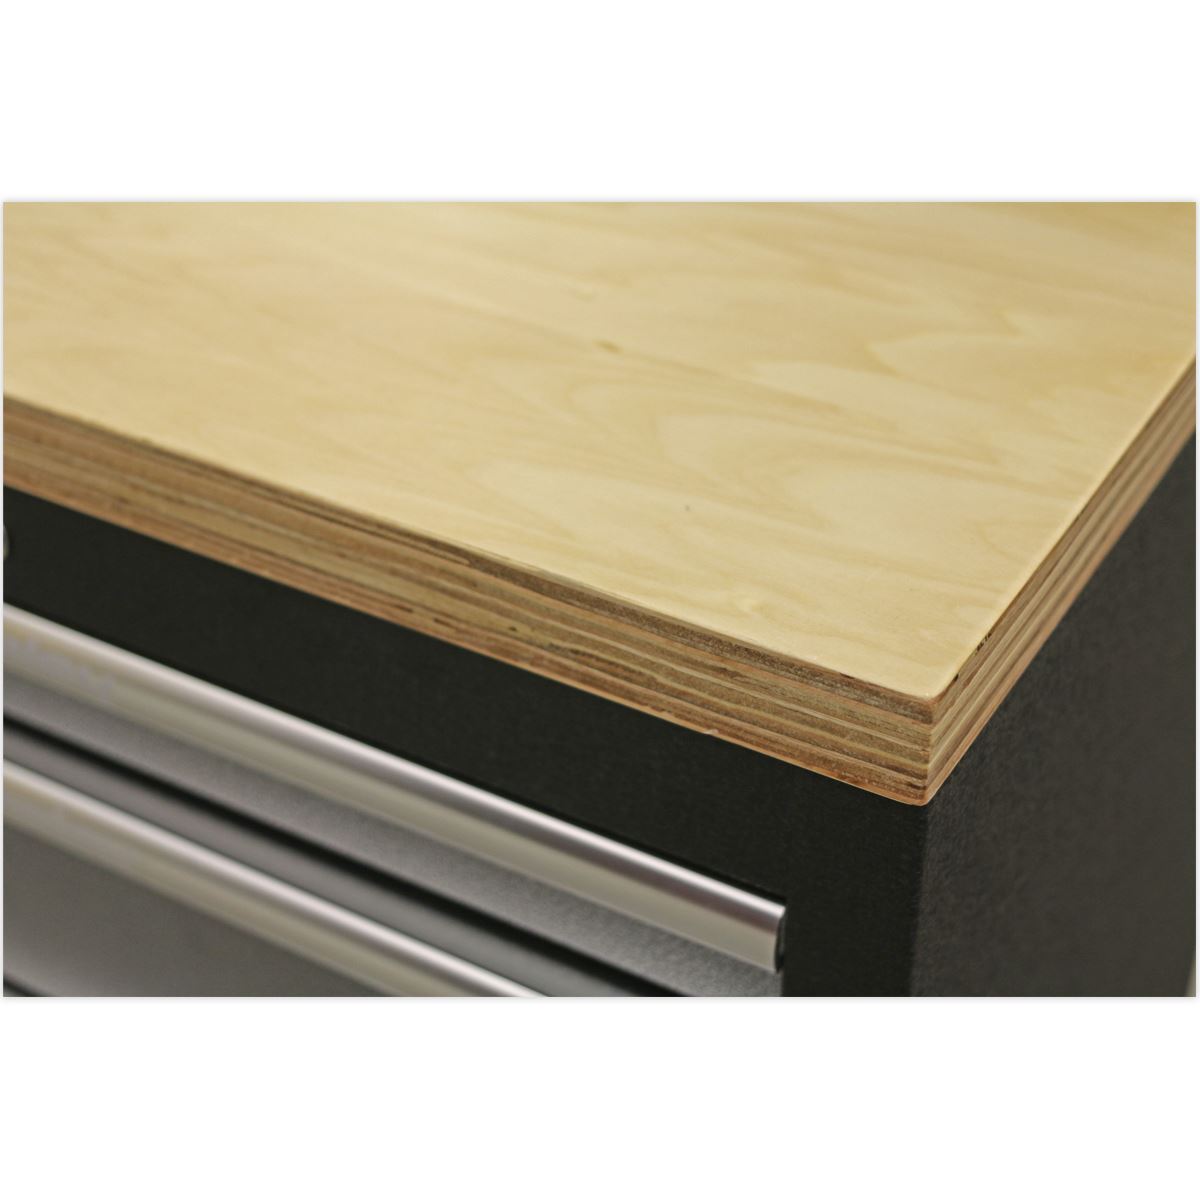 Sealey Superline Pro Pressed Wood Worktop 1360mm